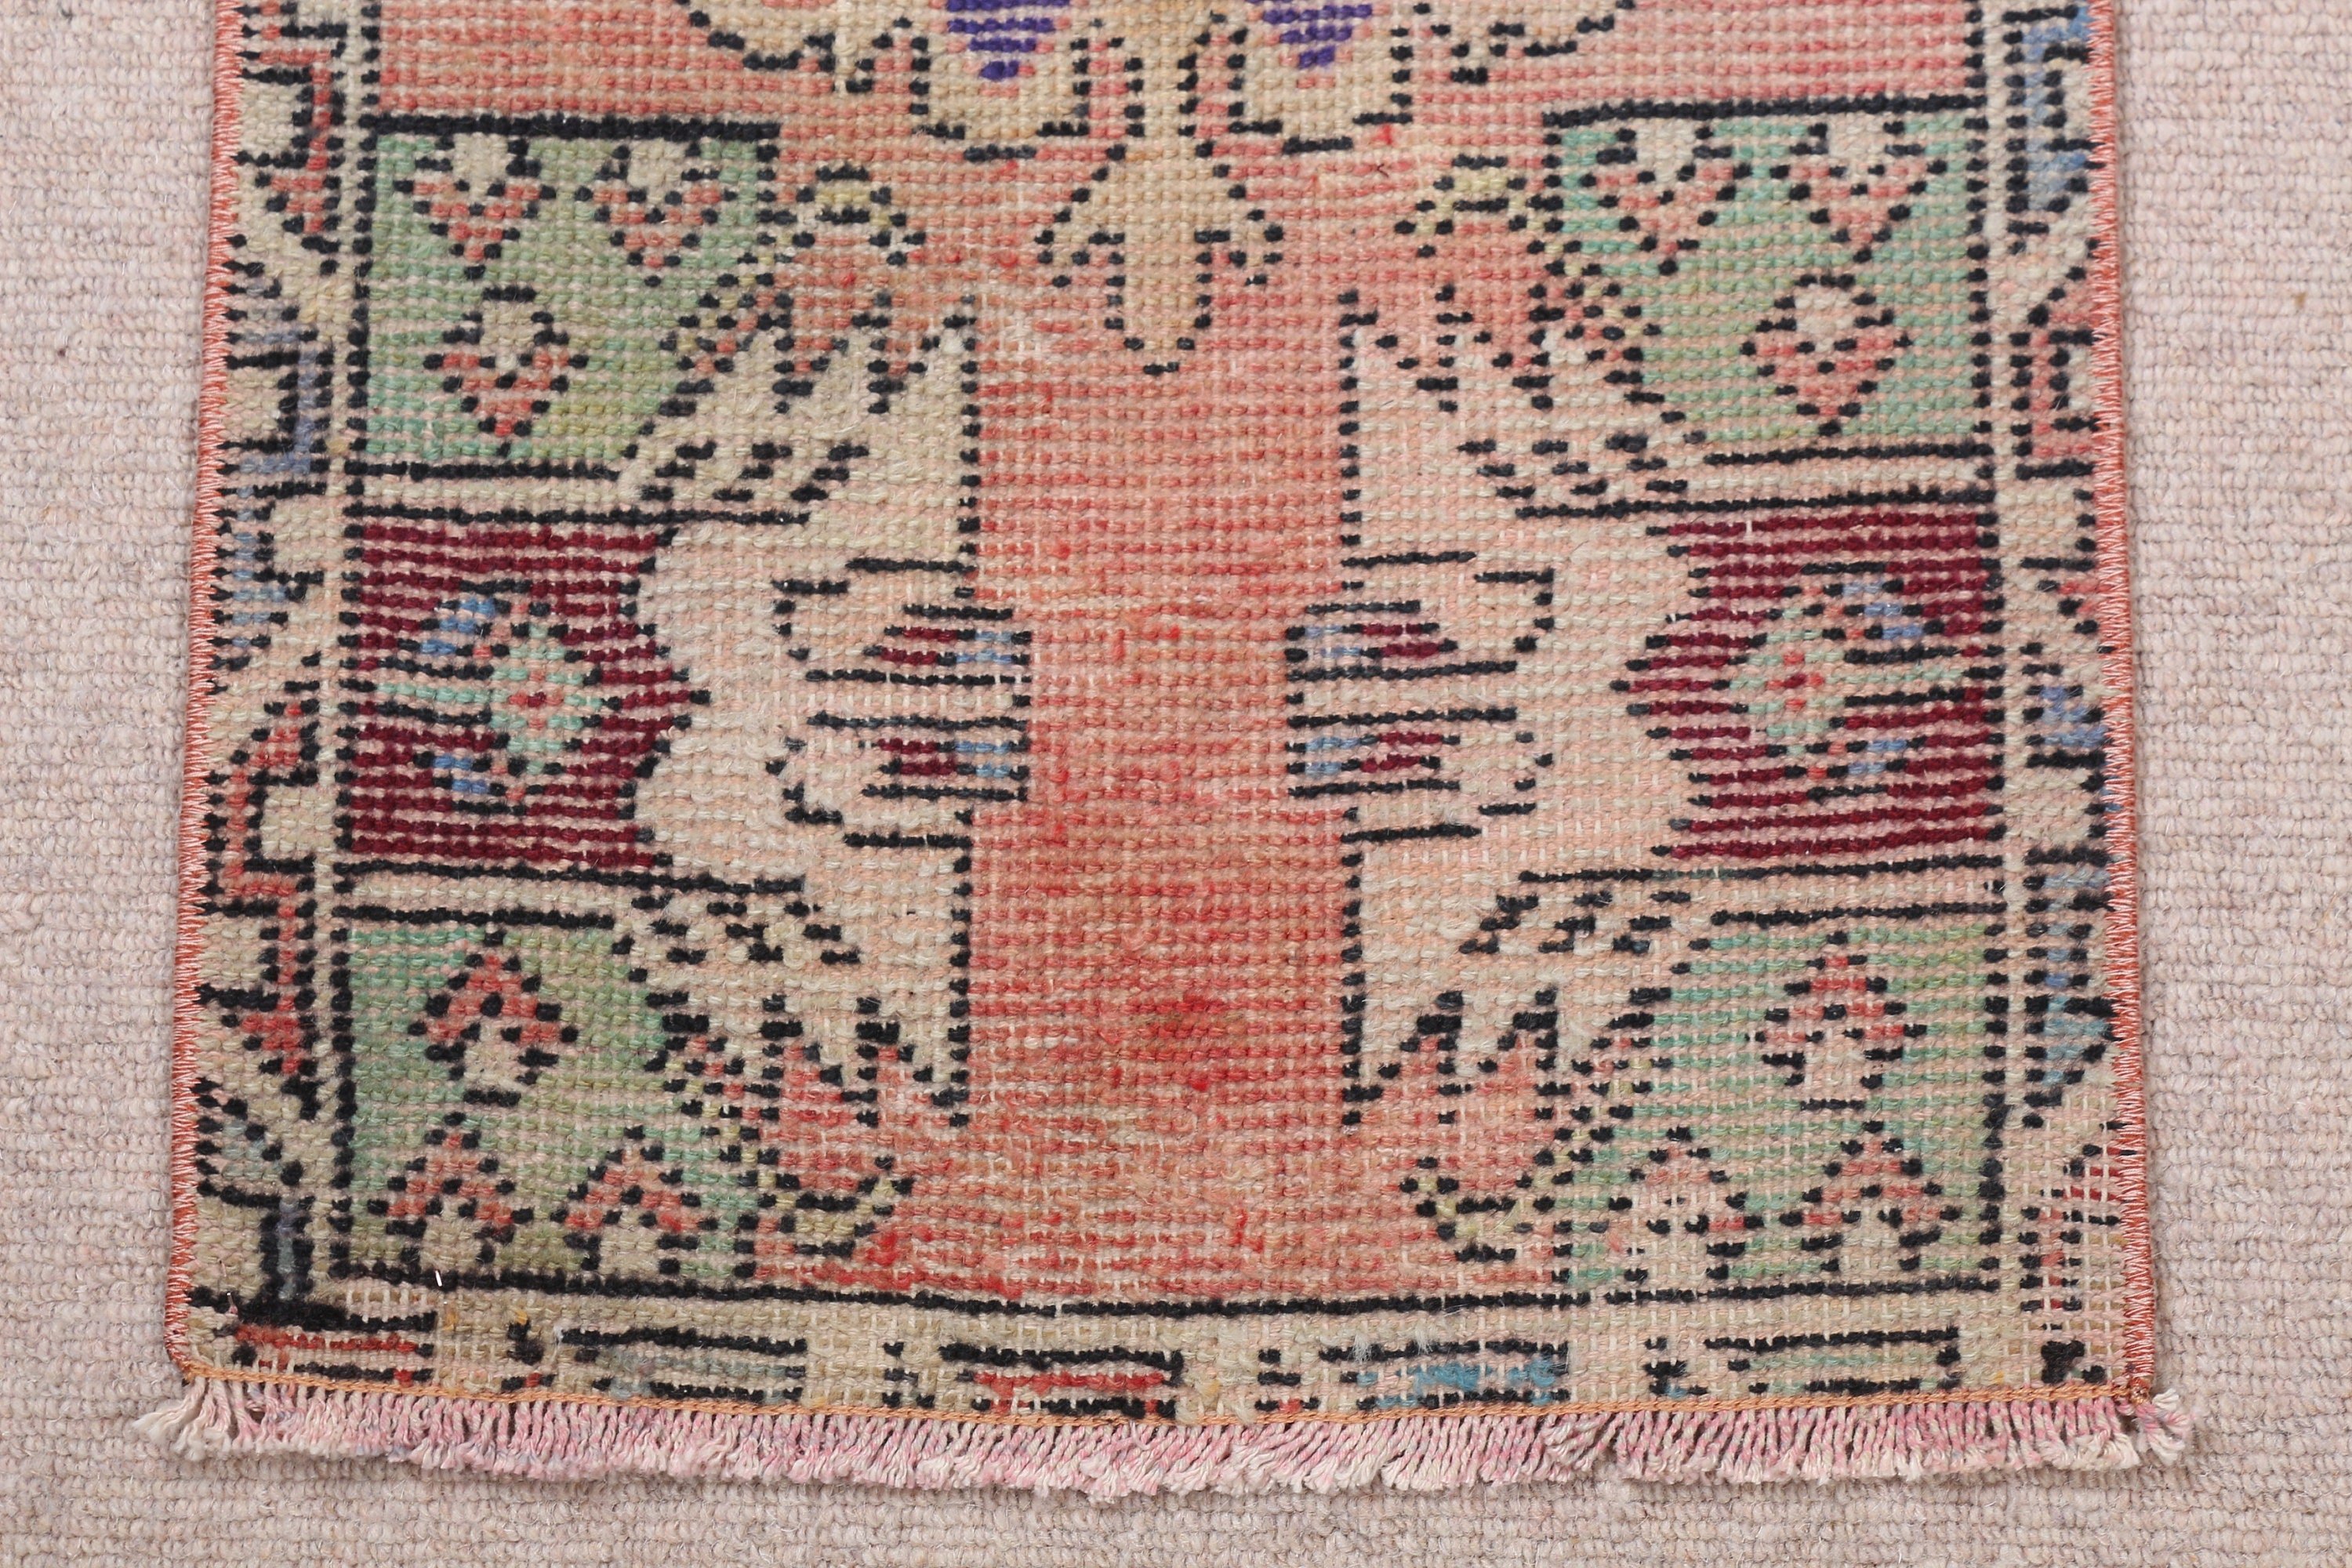 Cool Rugs, Pink Oriental Rugs, 1.4x2.7 ft Small Rug, Entry Rug, Vintage Rug, Bath Rugs, Art Rug, Moroccan Rug, Turkish Rug, Rugs for Entry